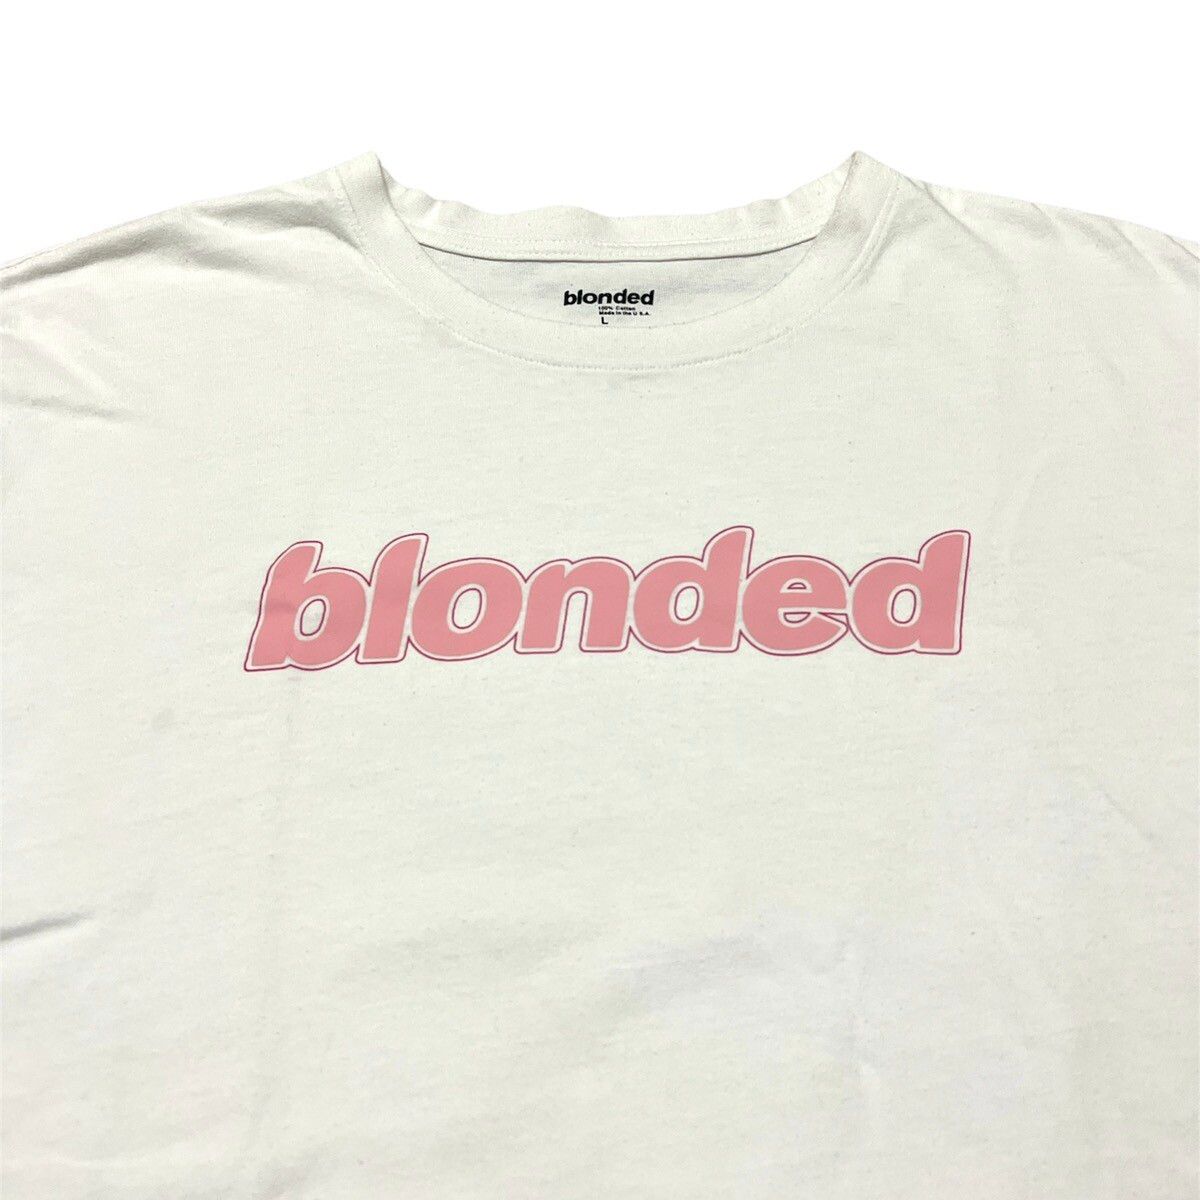 Frank Ocean Blonded T shirt - 2